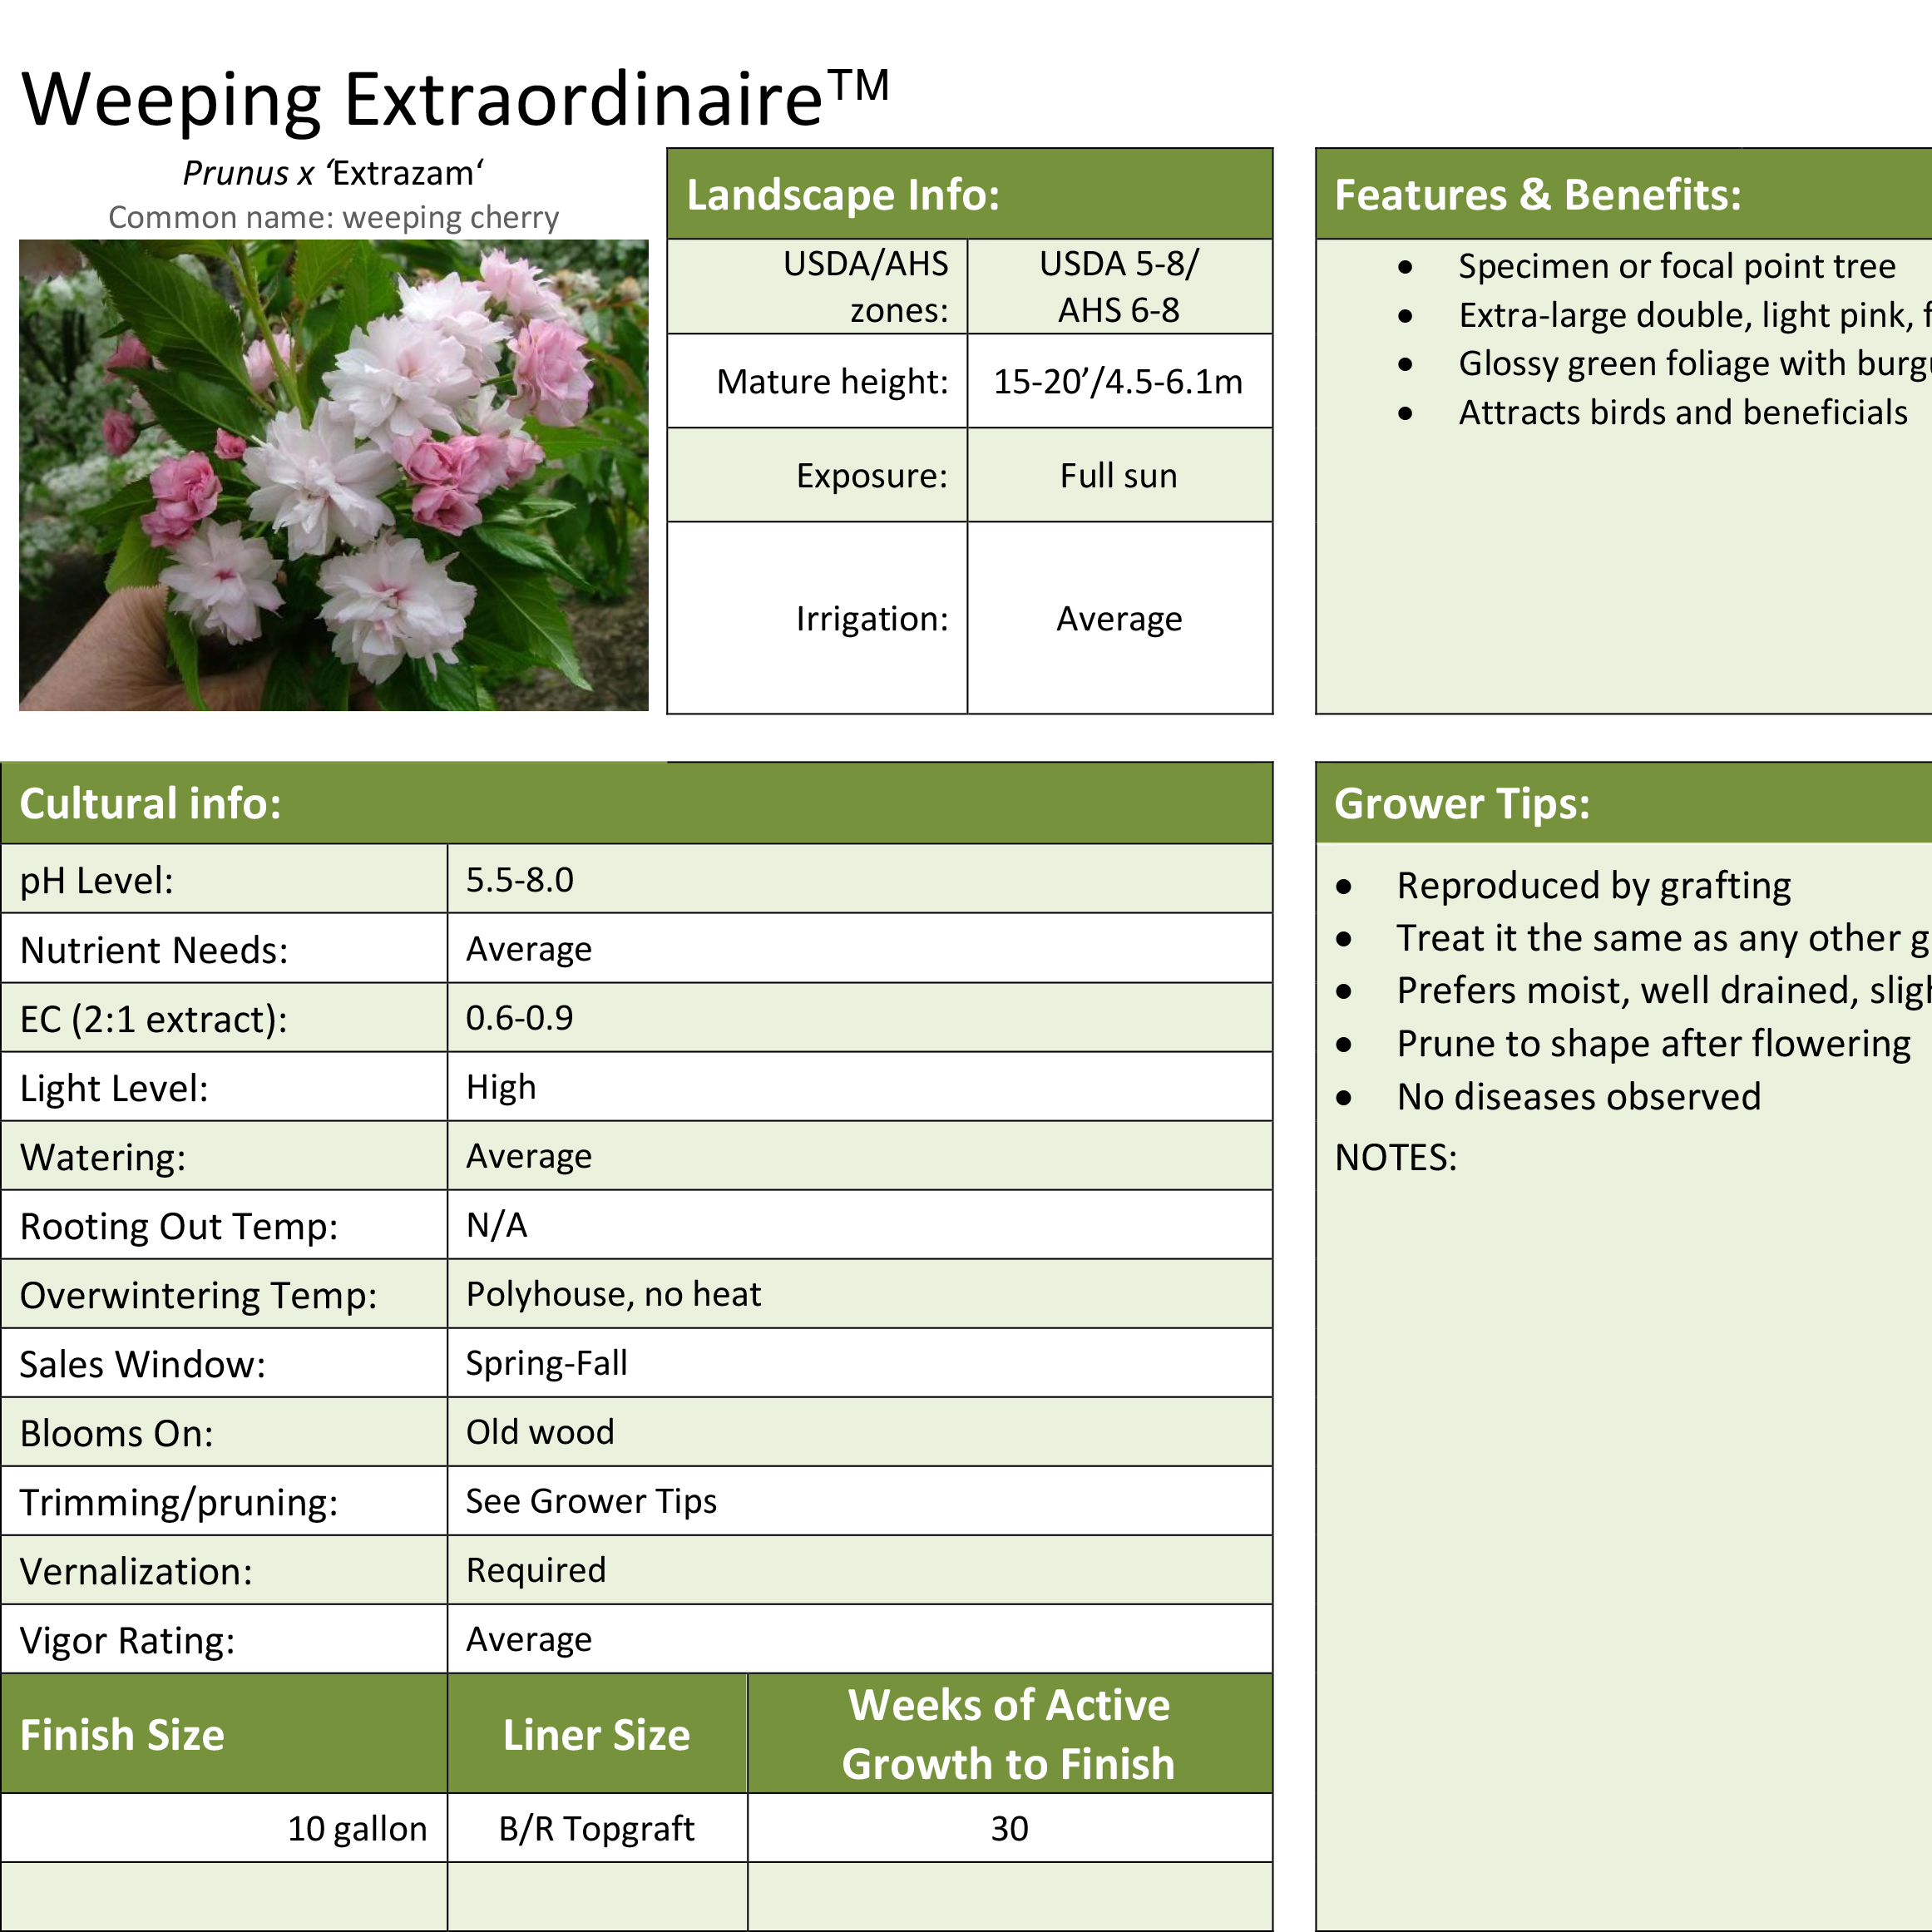 Preview of Weeping Extraordinaire Prunus Professional Grower Sheet PDF